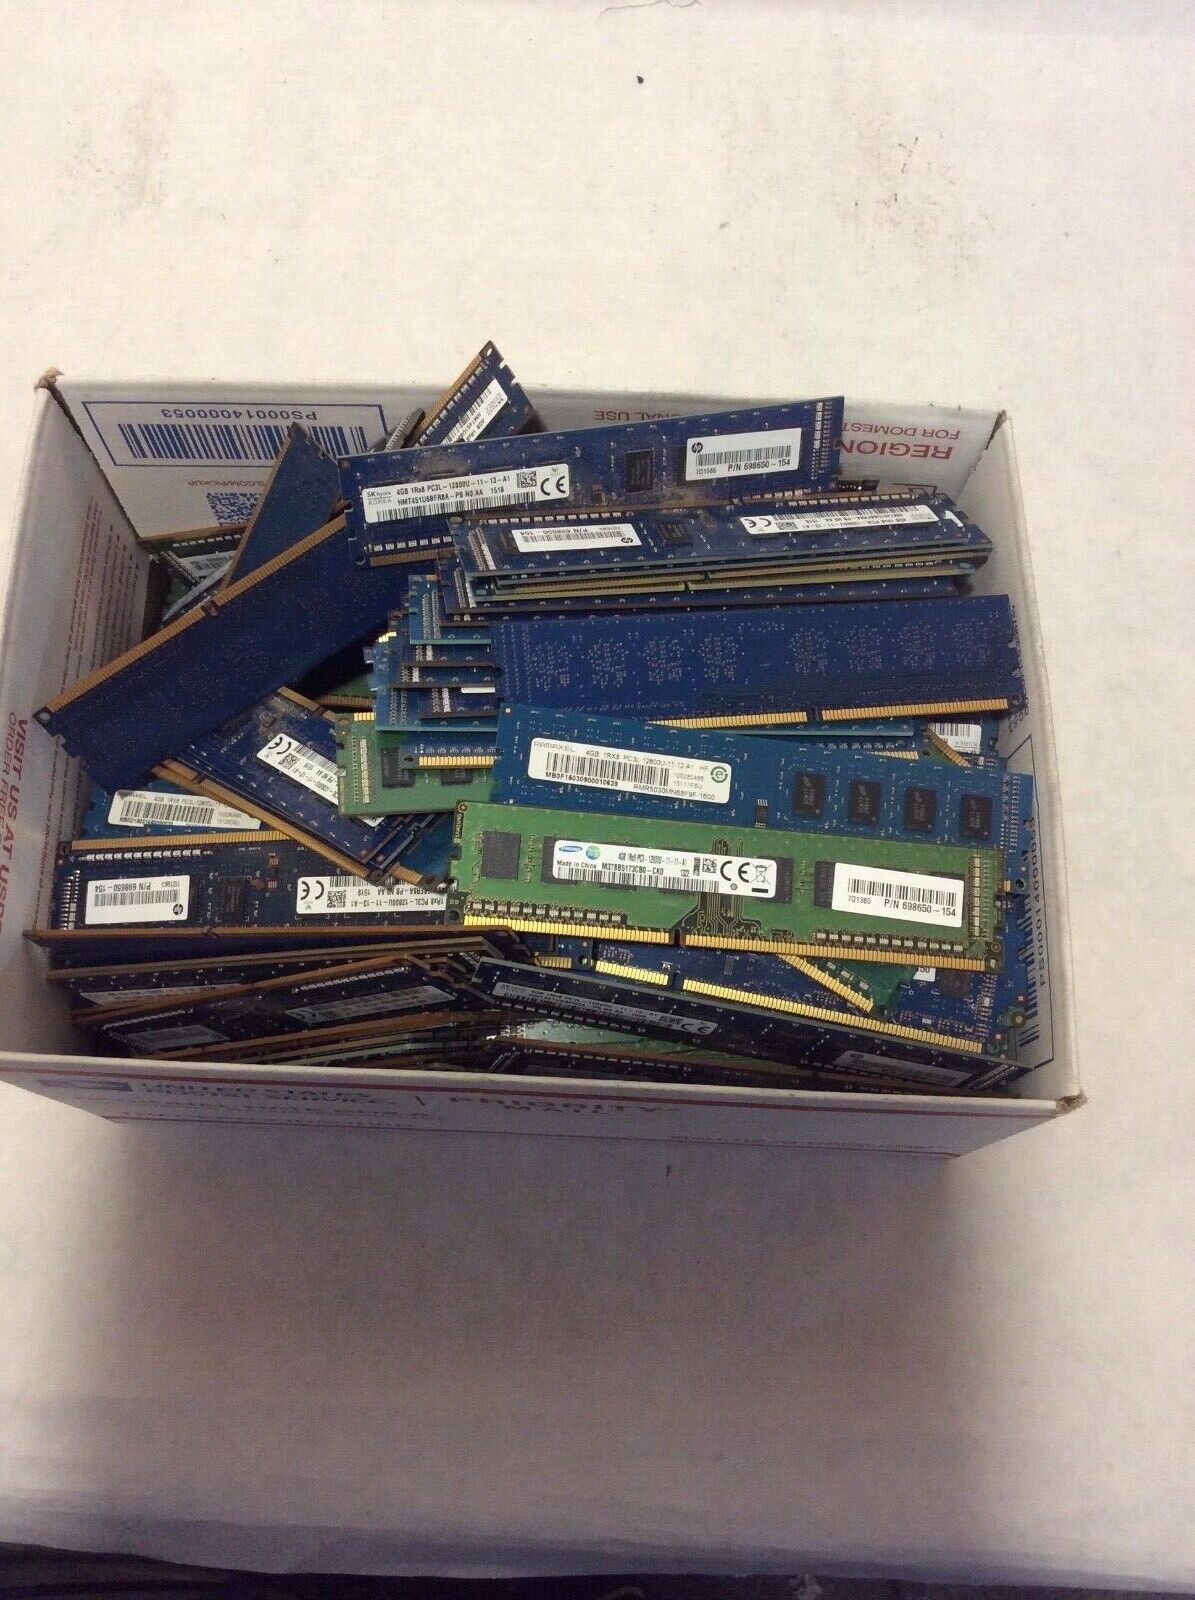 Lot of 50 4GB DDR3 PC3 Sticks Desktop Ram - mixed speeds and brands